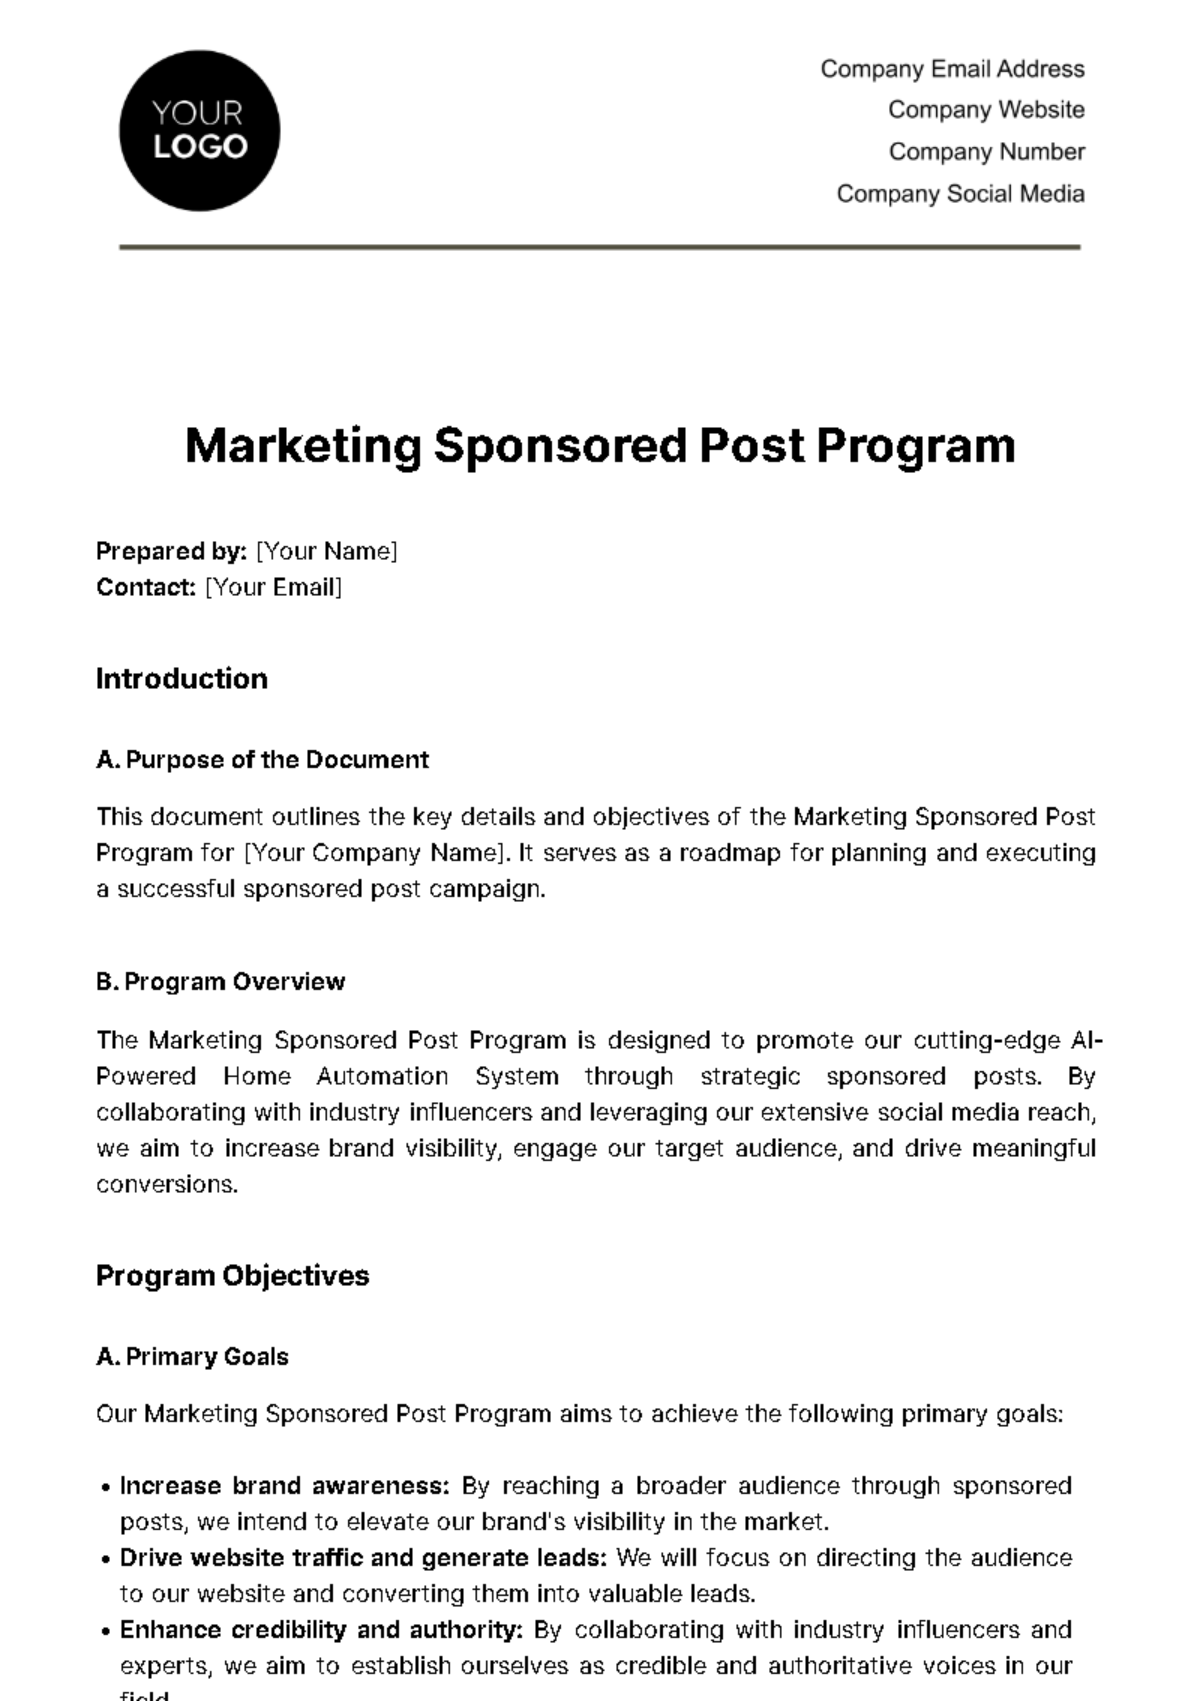 Free Marketing Sponsored Post Program Template